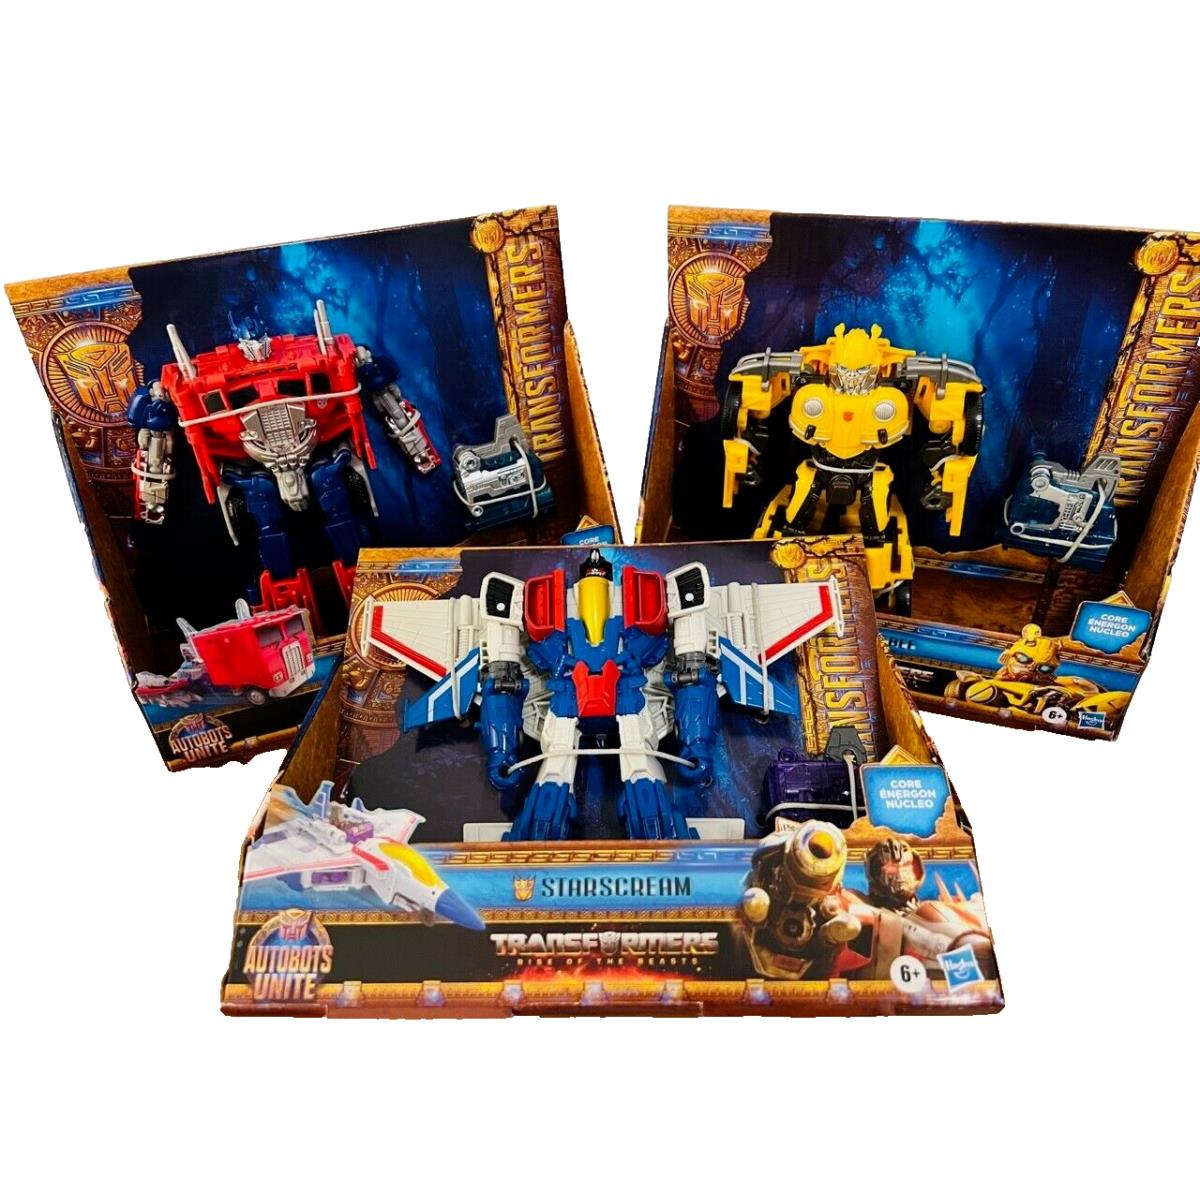 3 Transformers Rise of The Beasts Autobots Unite Bumblebee Starscream OP Prime